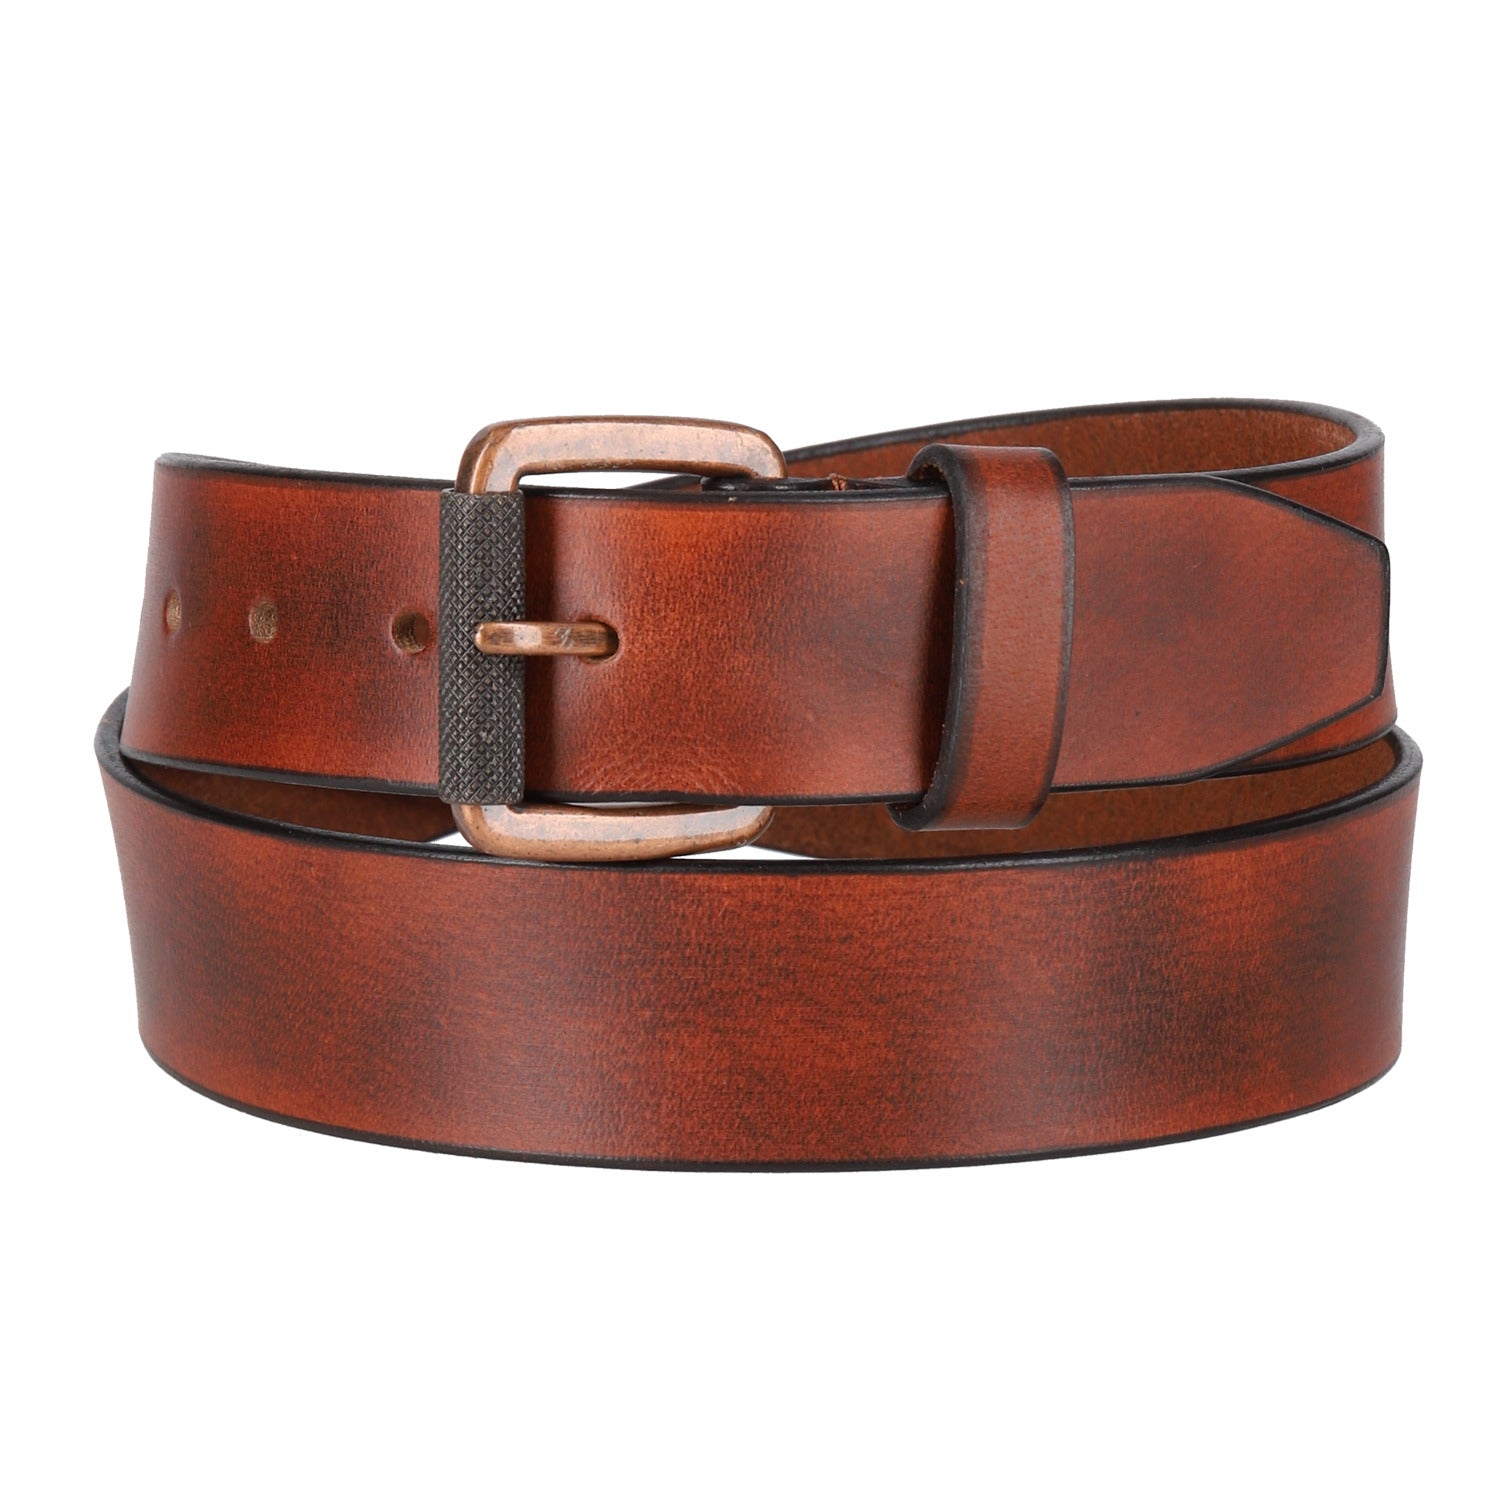 RIDEZ LEATHER BELT Genuine Leather Belt Aging Brown CB-133 